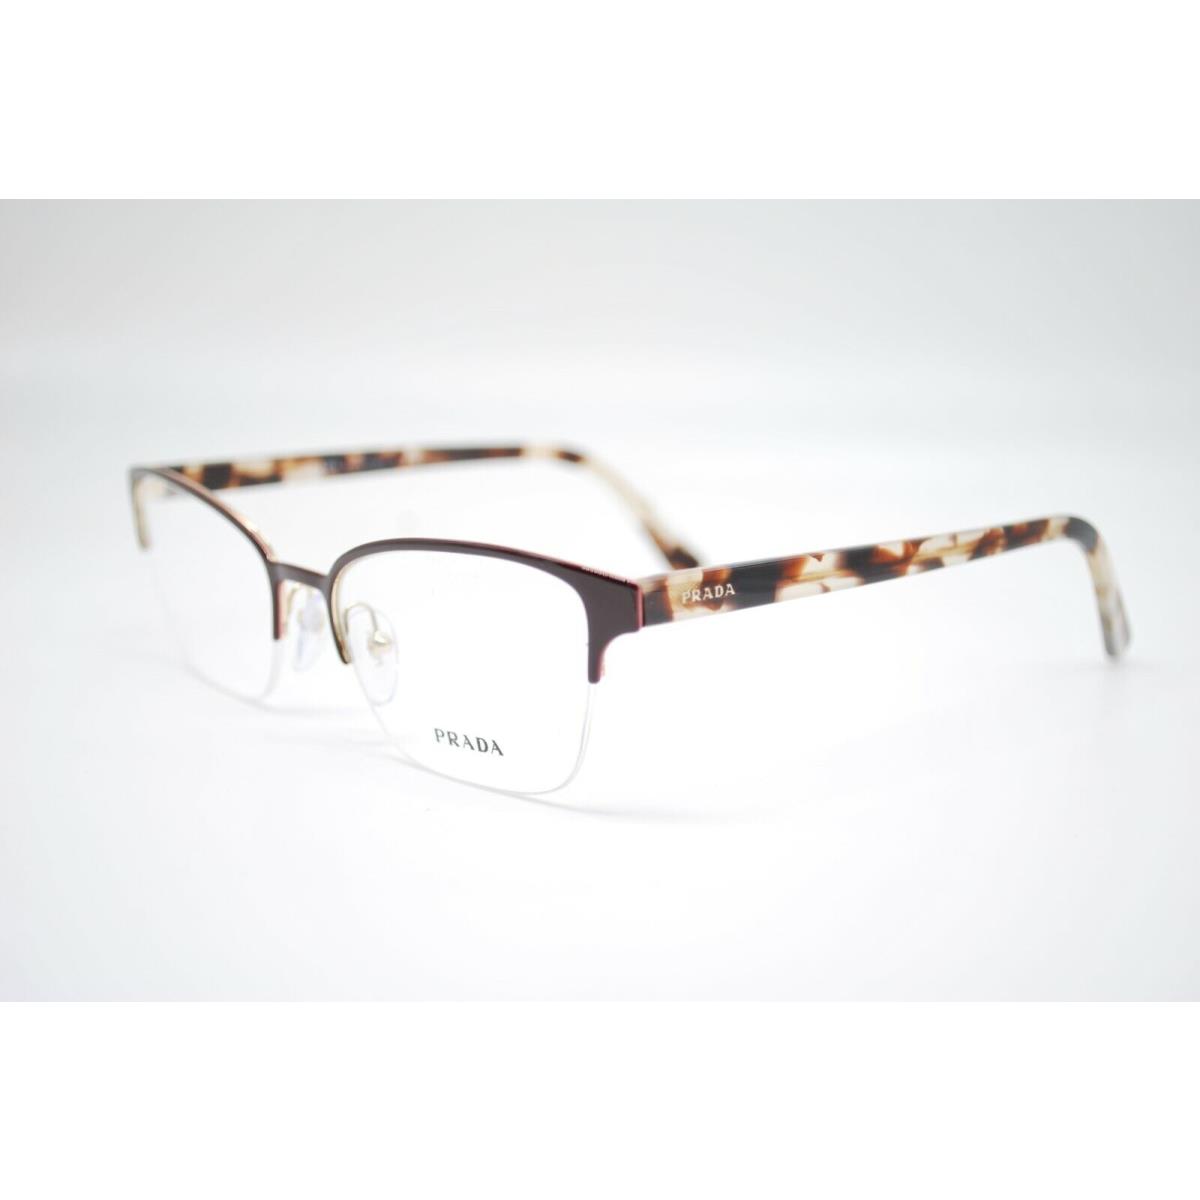 Prada eyeglasses VPR - TOP BORDEAUX/PALE GOLD Frame 0